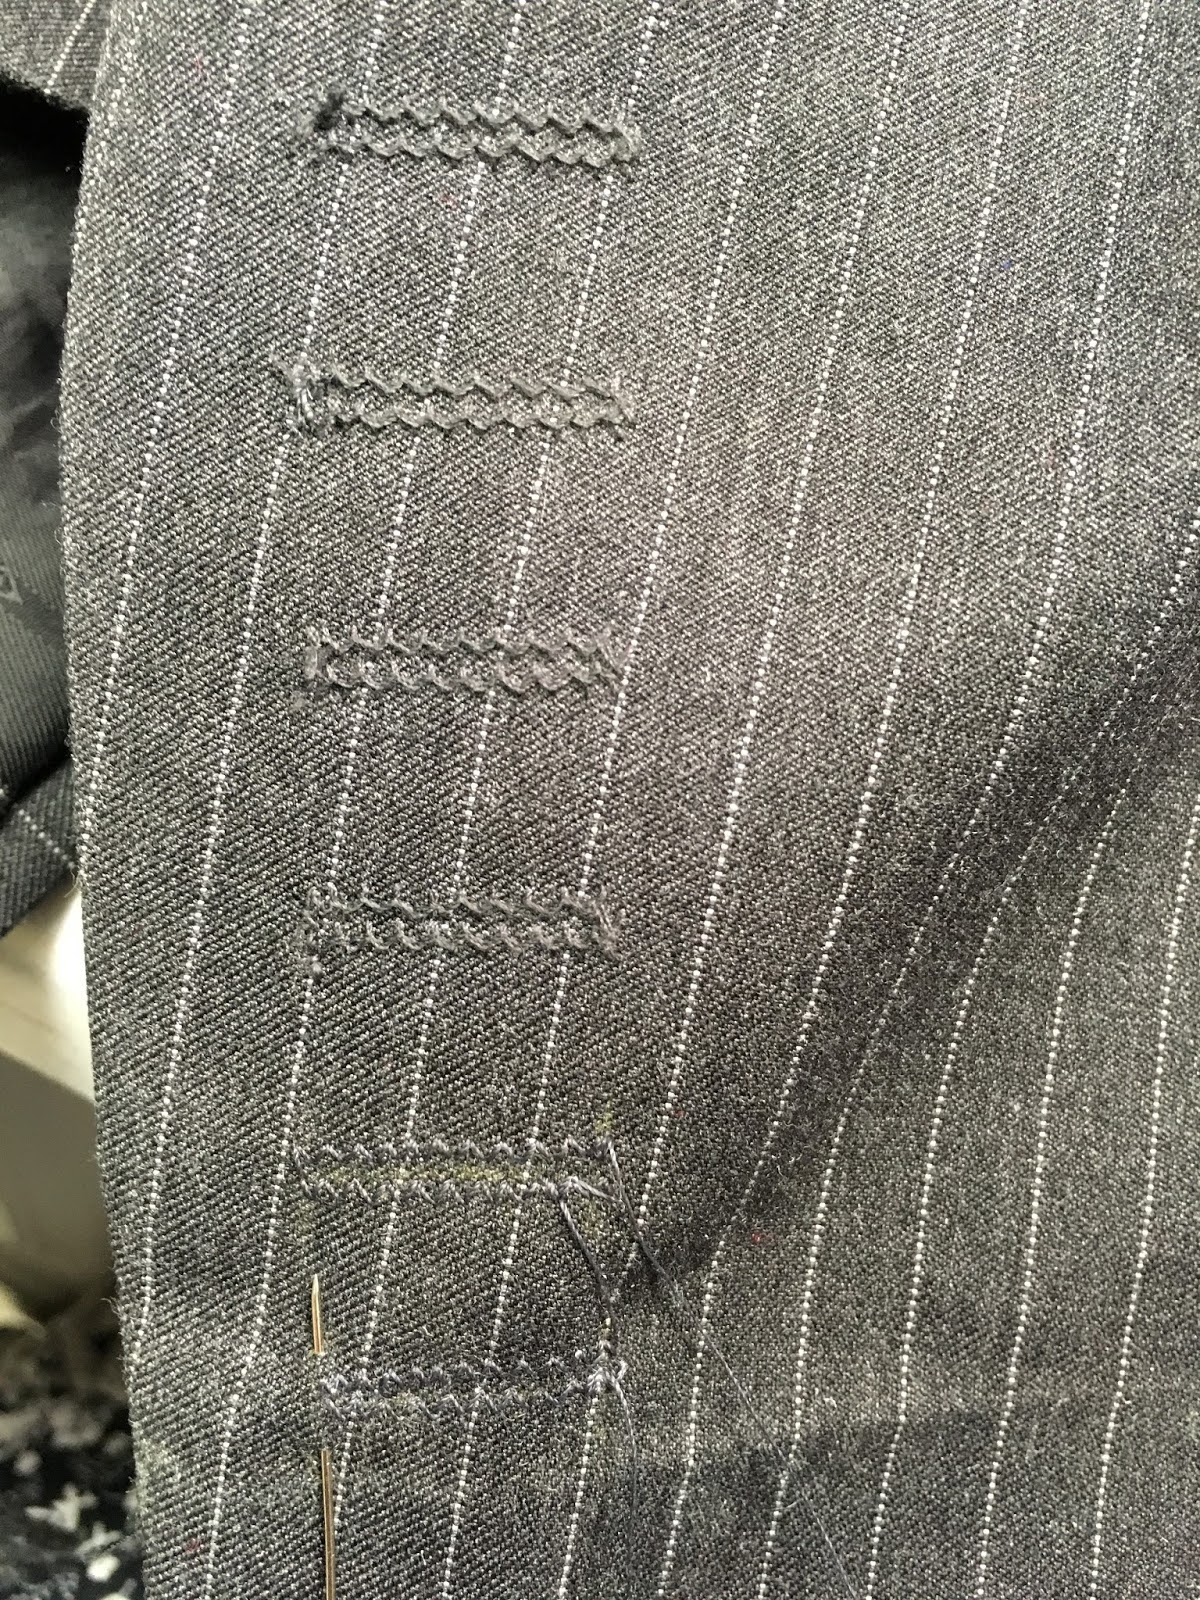 sewcreatelive: How to Lengthen (or Shorten) Men's Suit Sleeves